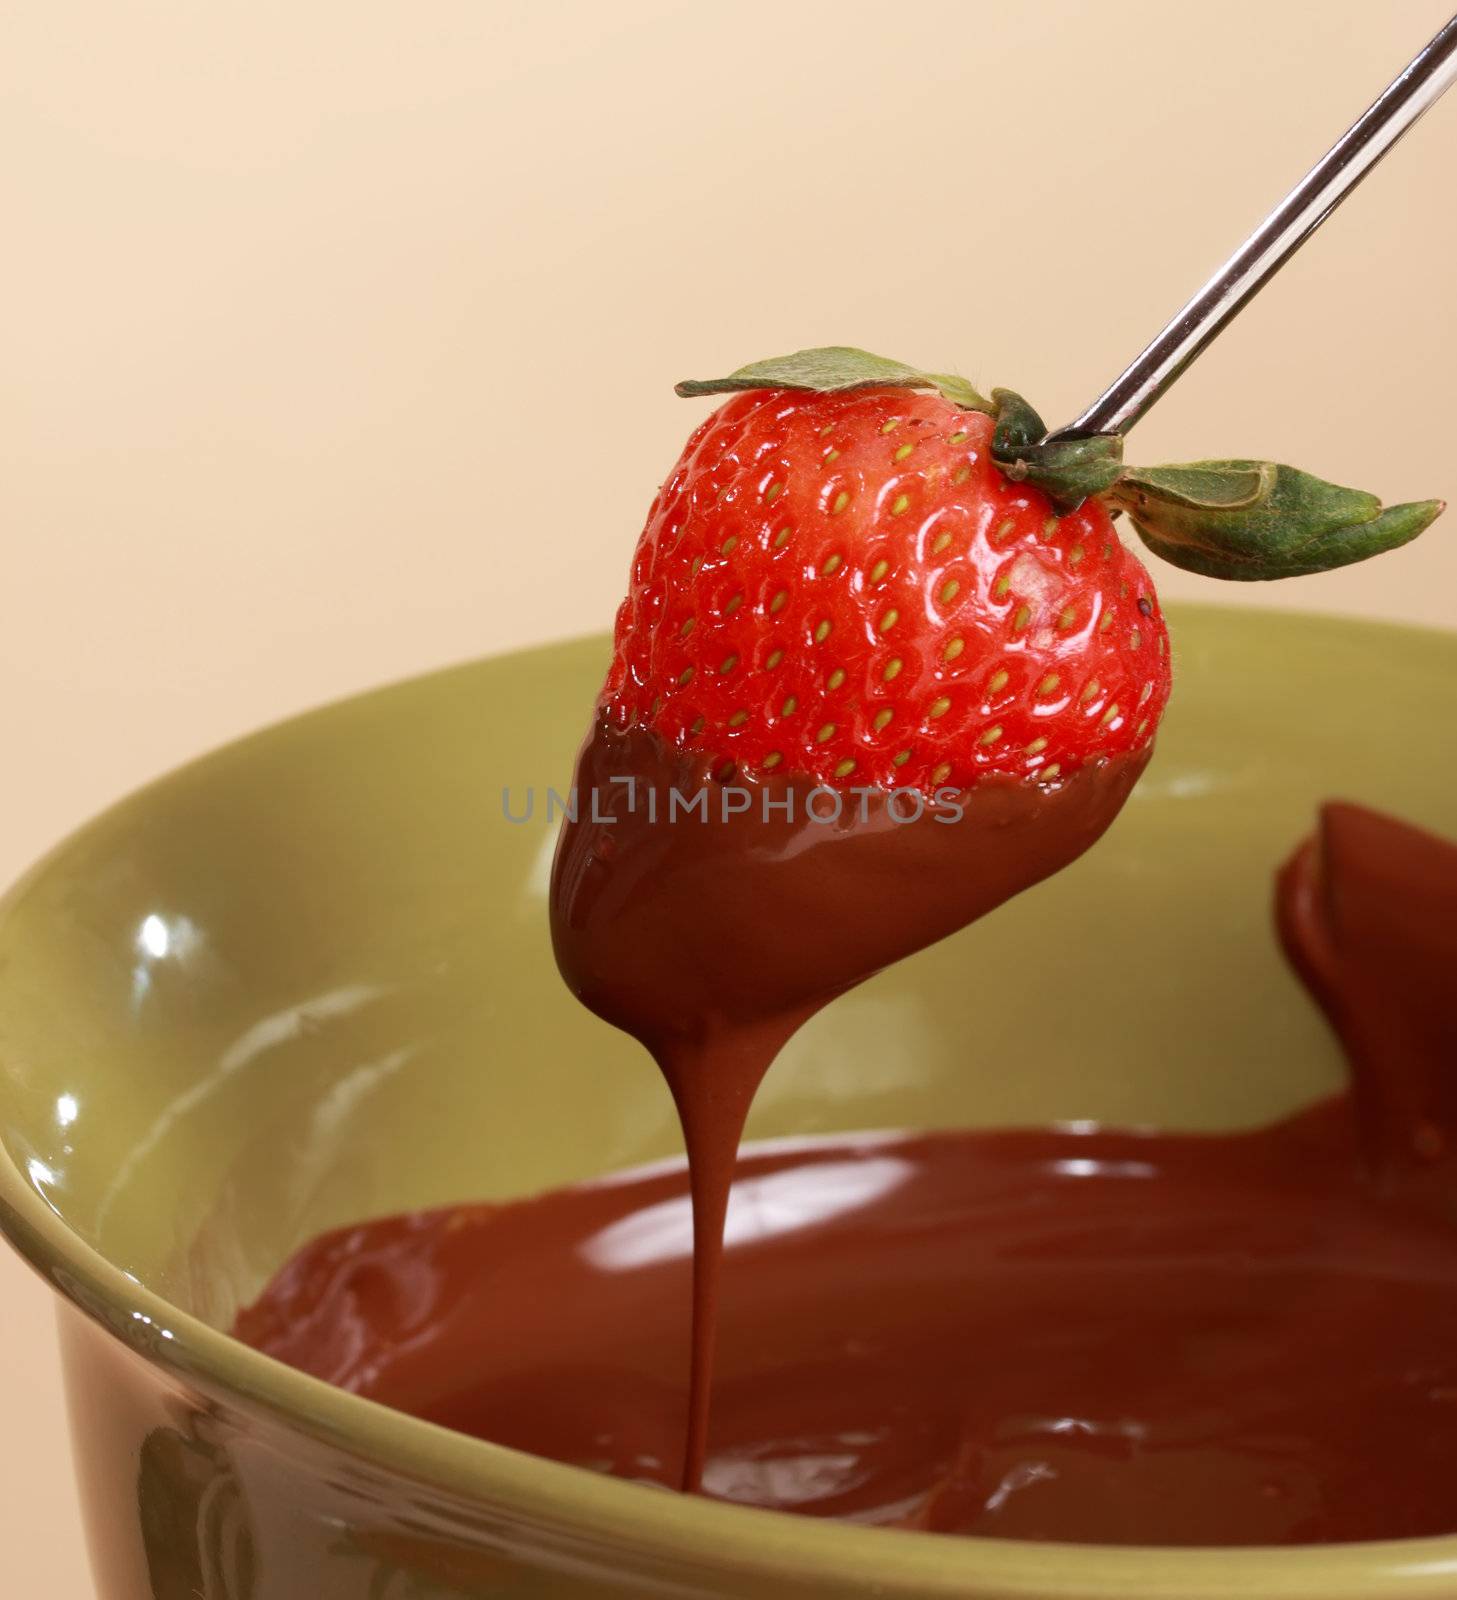 chocolate fondue kit and fresh strawberry, beige background